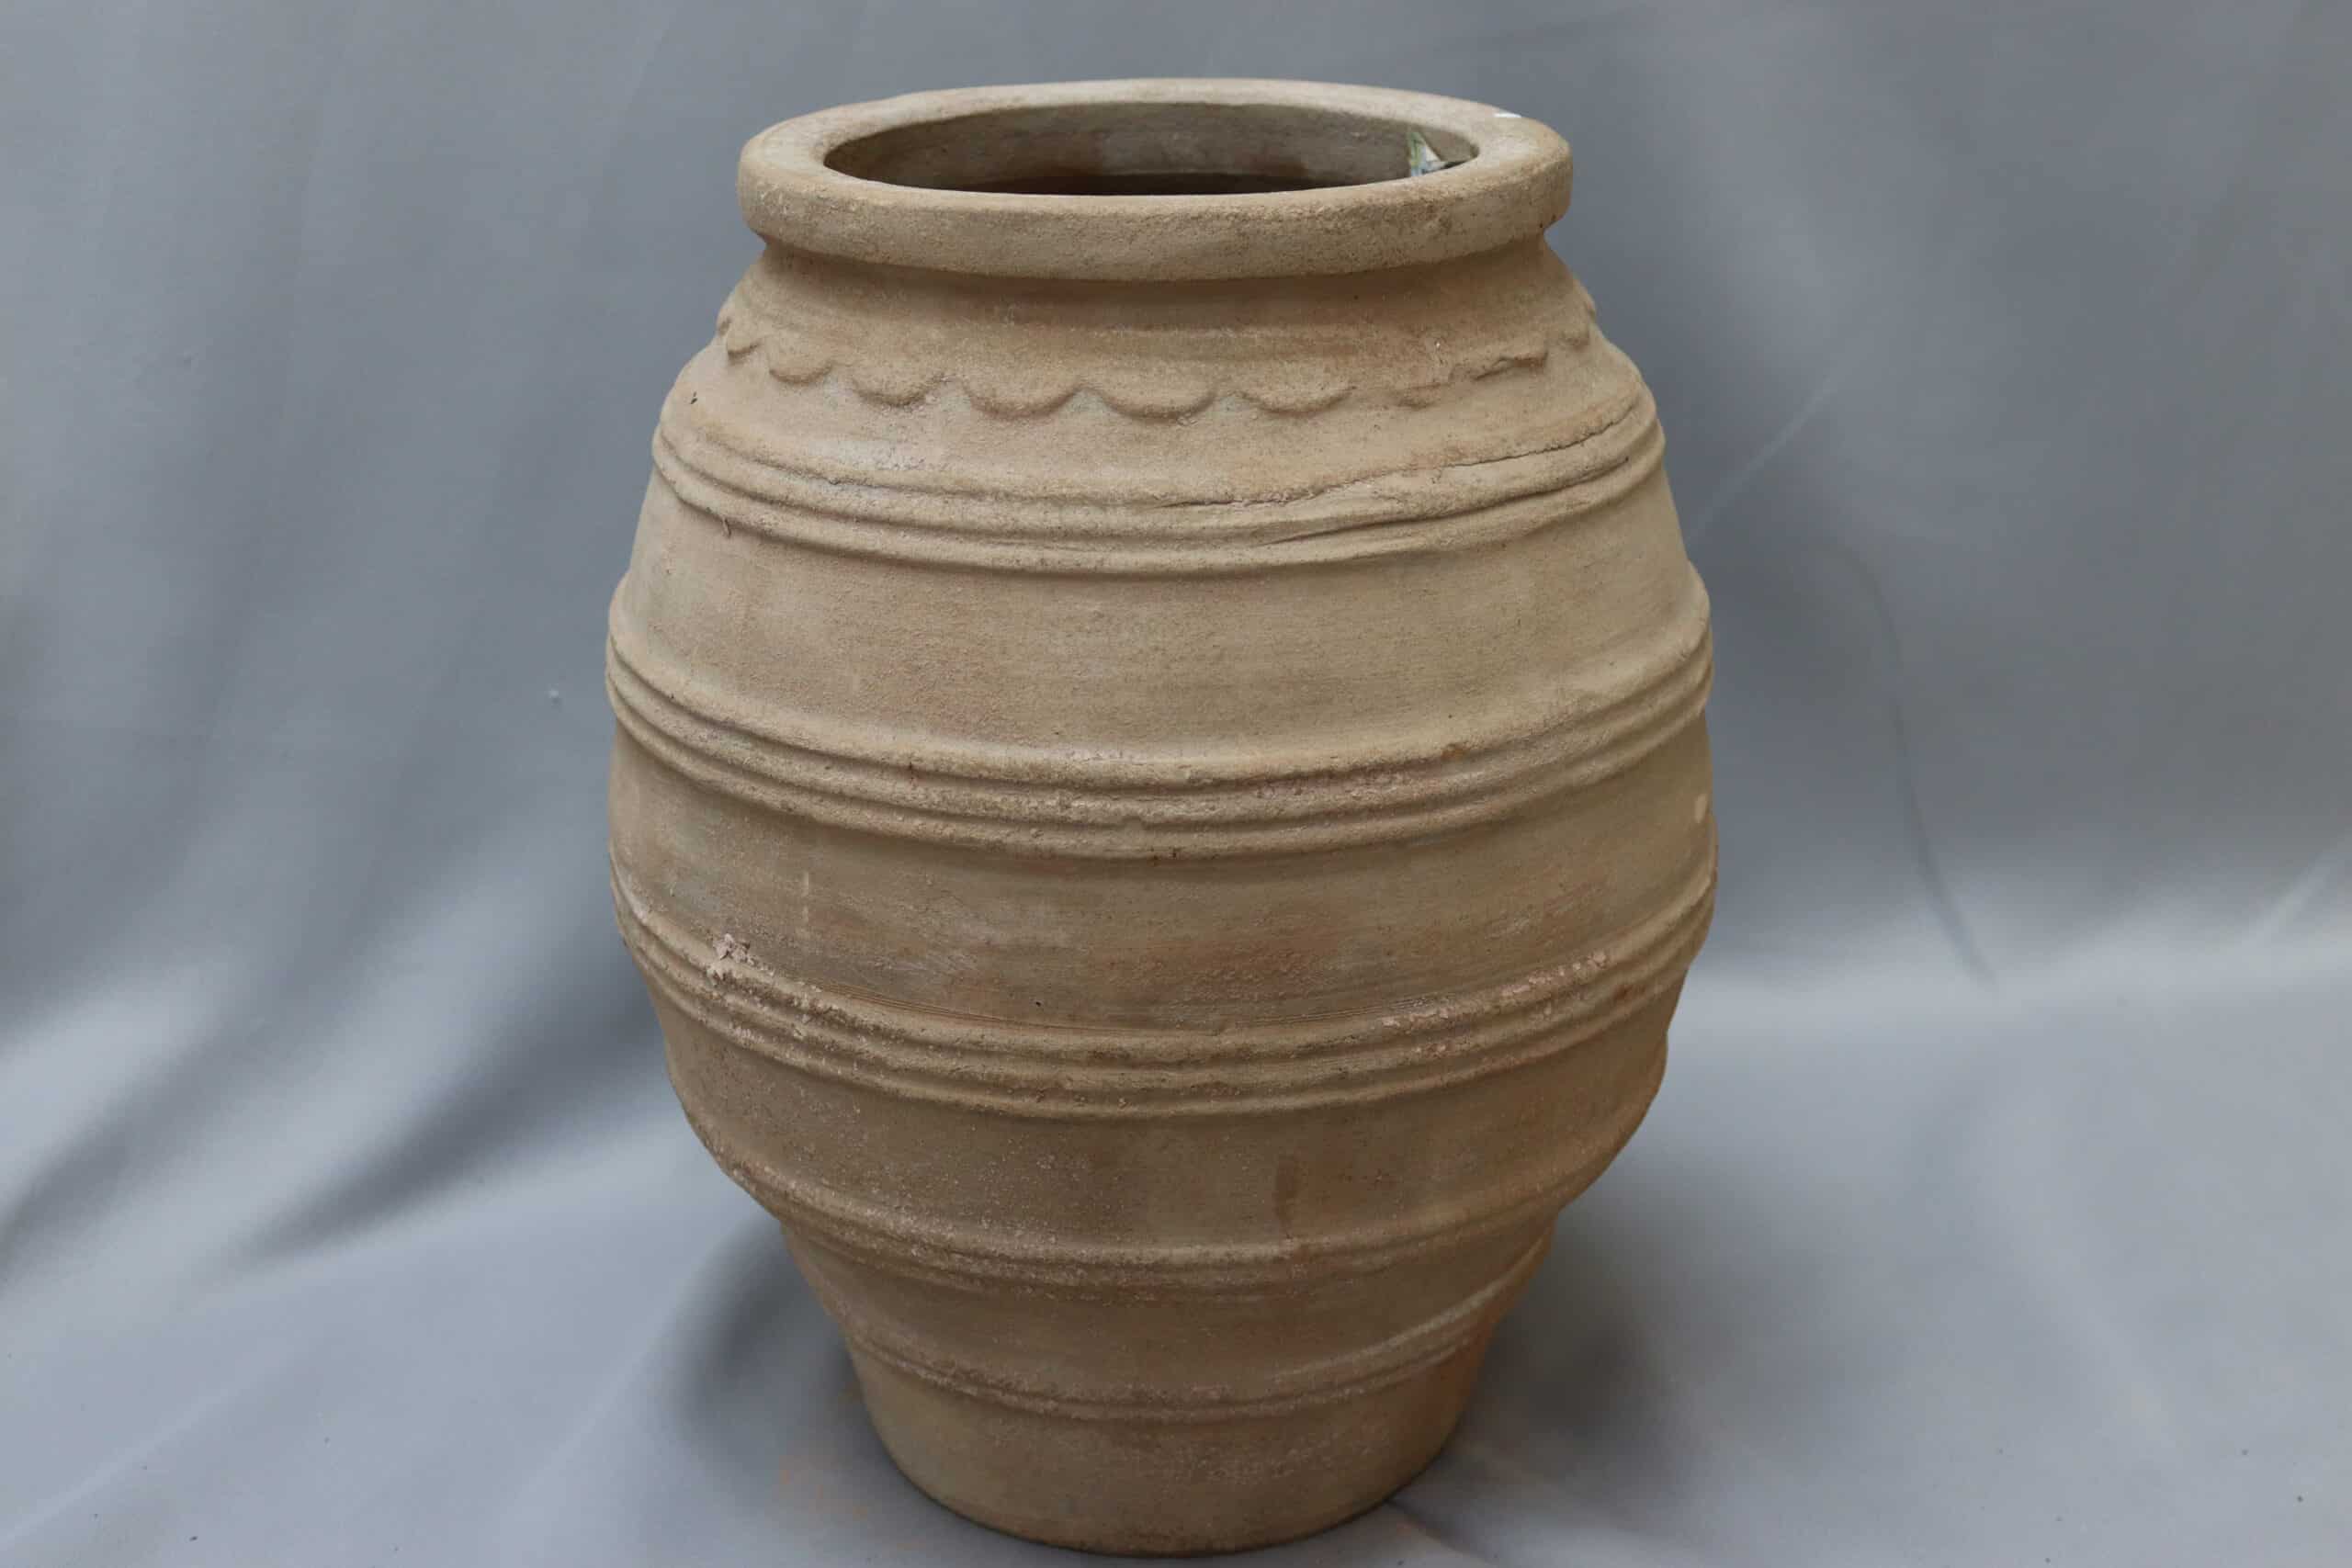 A small stone-coloured Palermo urn plant pot.